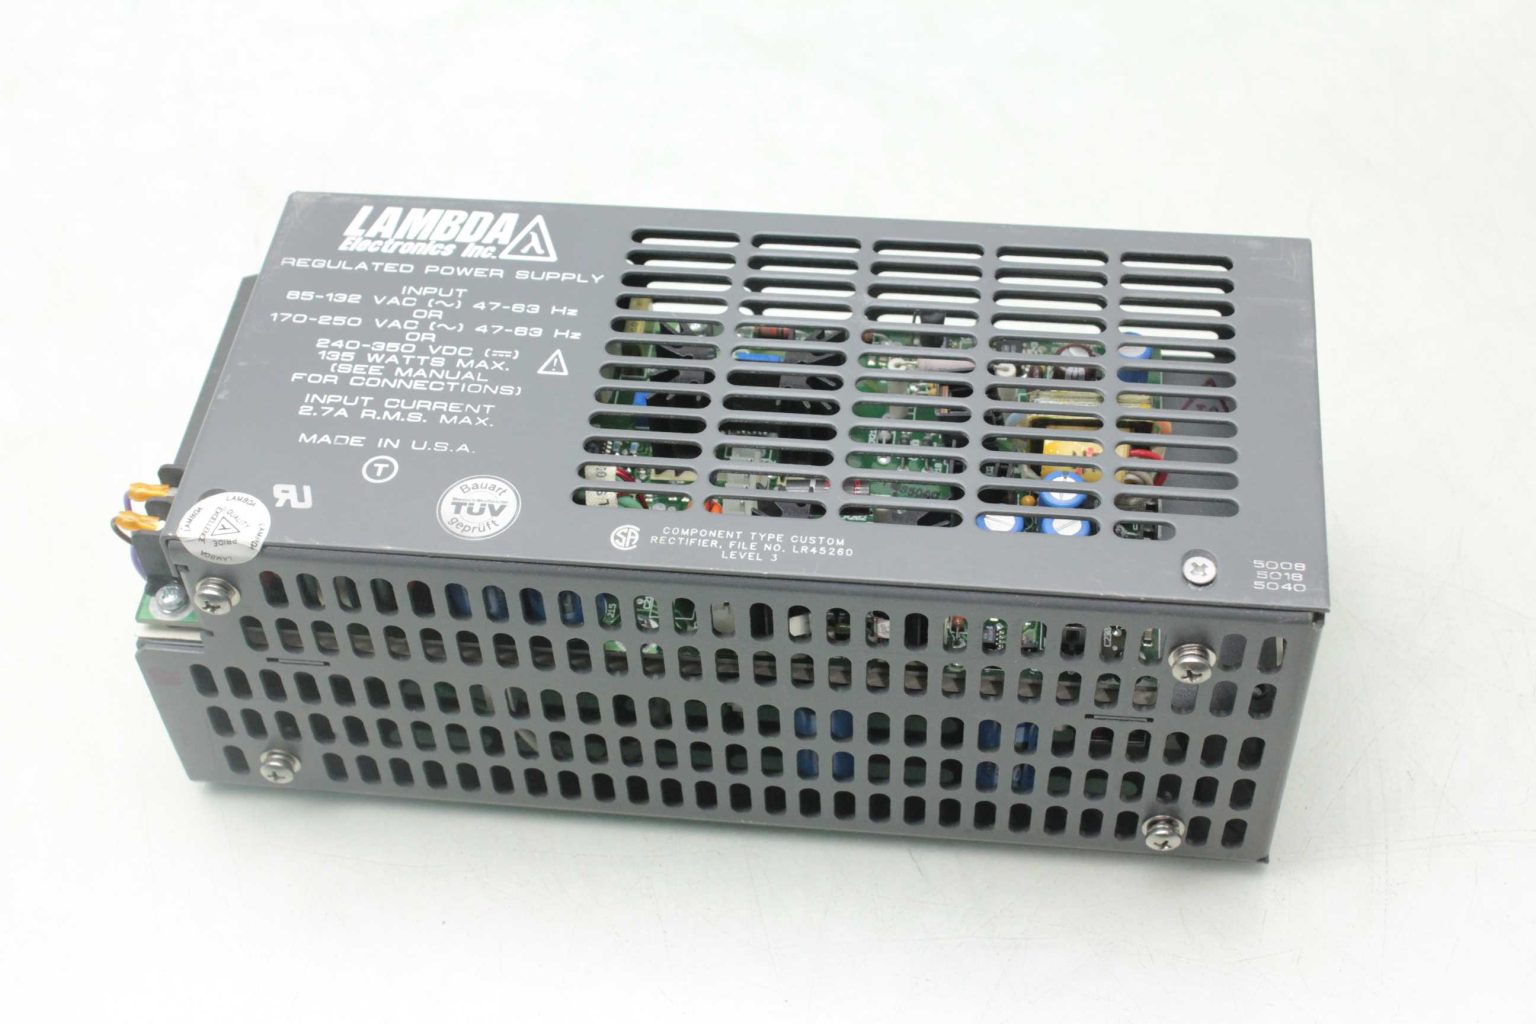 Lambda-LMS-5040-Regulated-Power-Supply-0-40V-DC-Output-Used-183112117619-17...